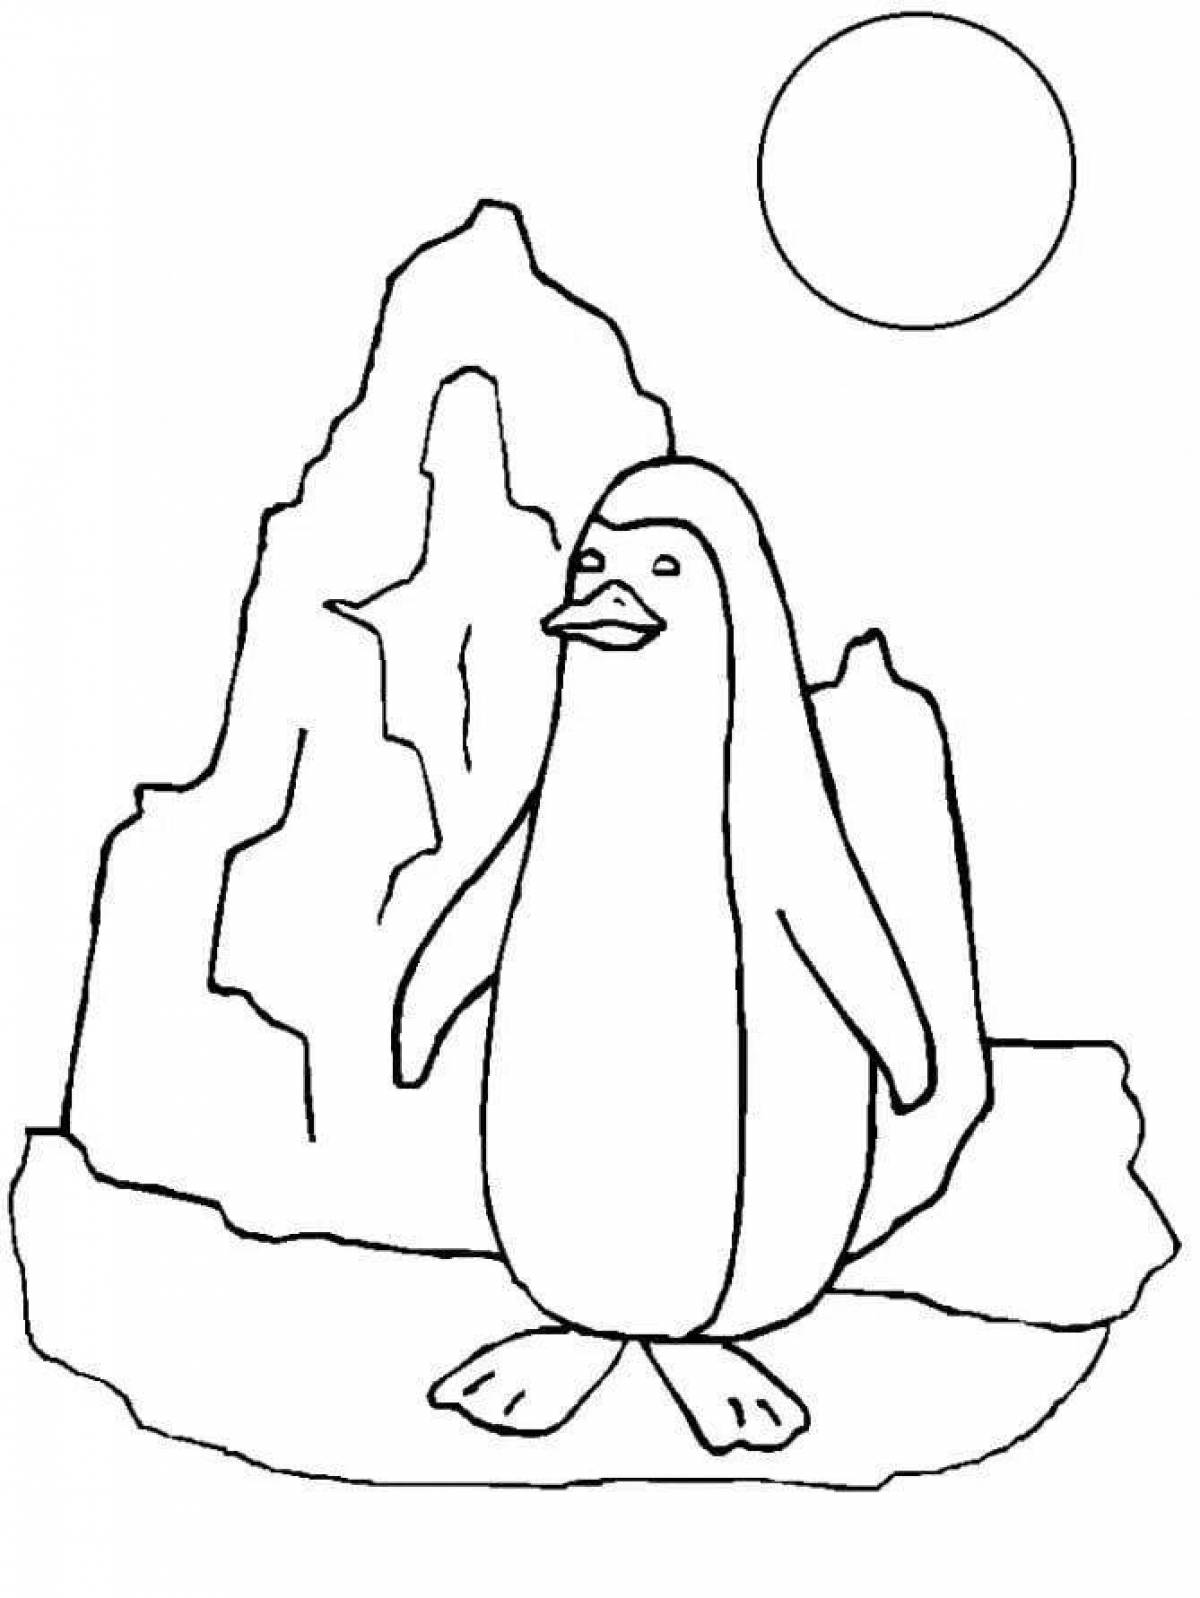 Penguin on an ice float #7